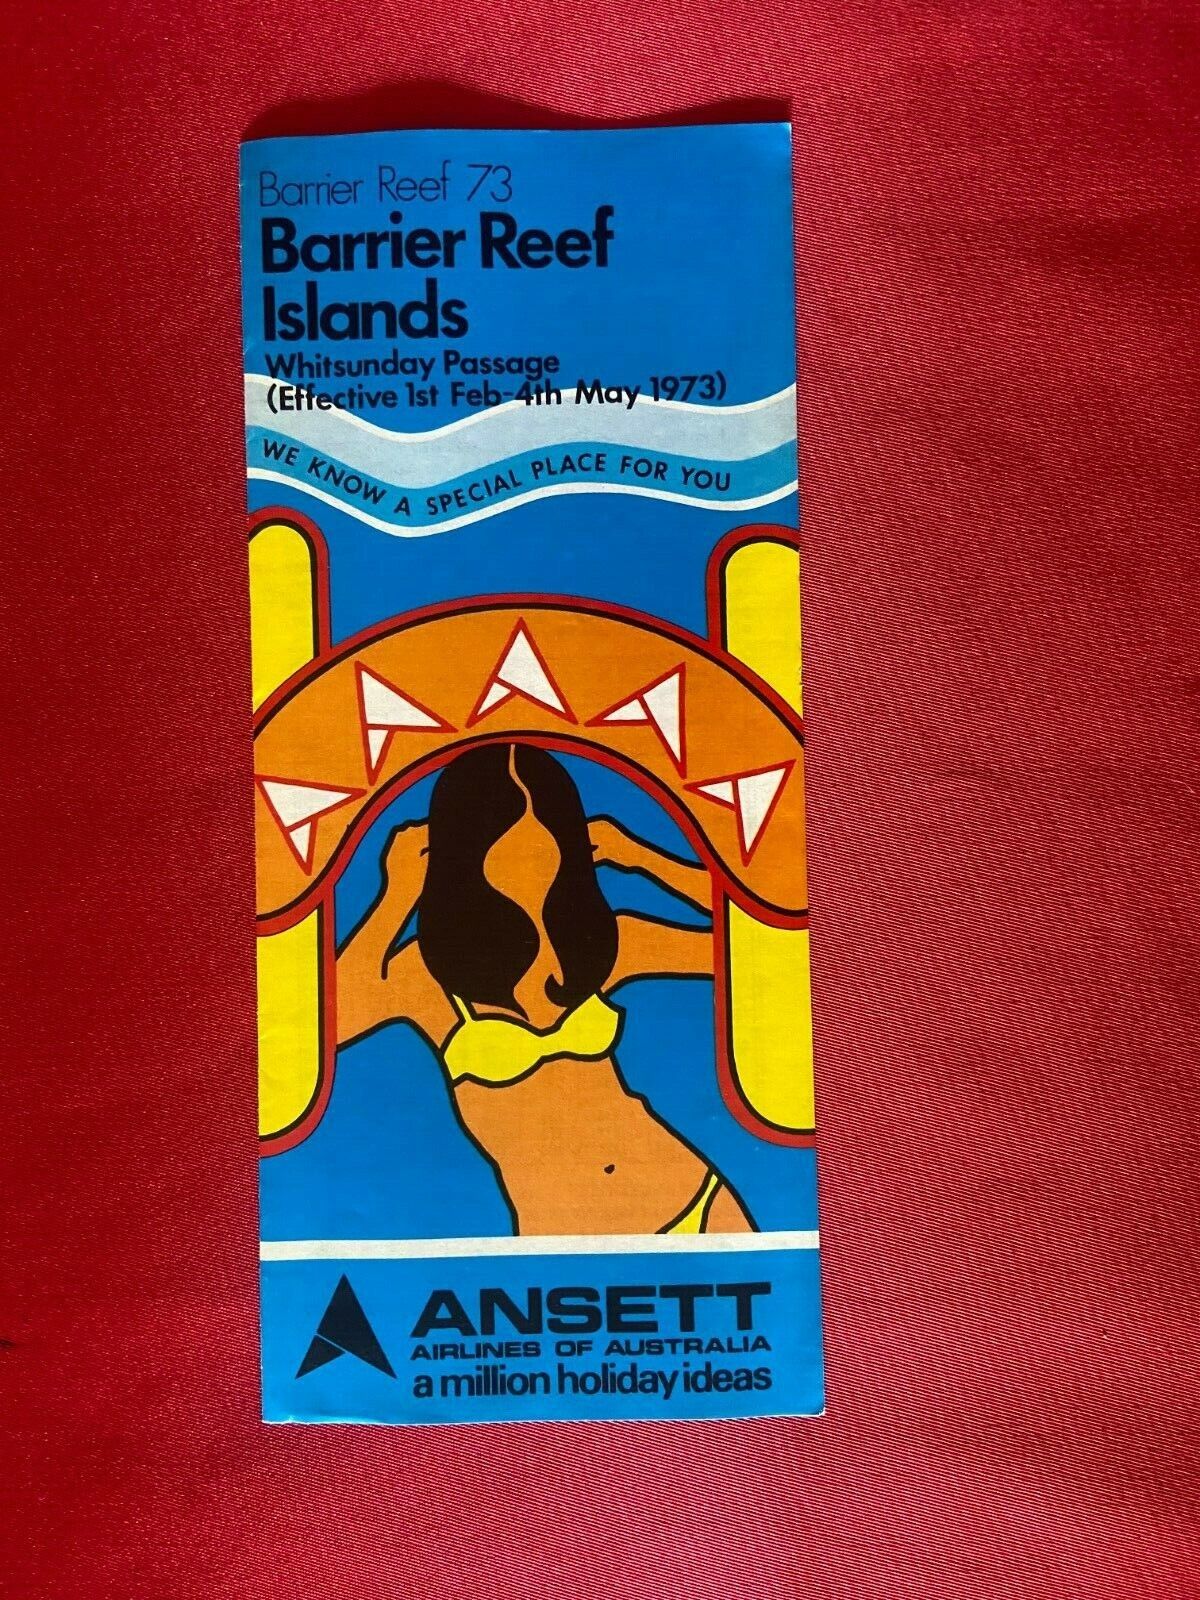 Ansett Airlines of Australia Barrier Reef Islands 1973 Brochure